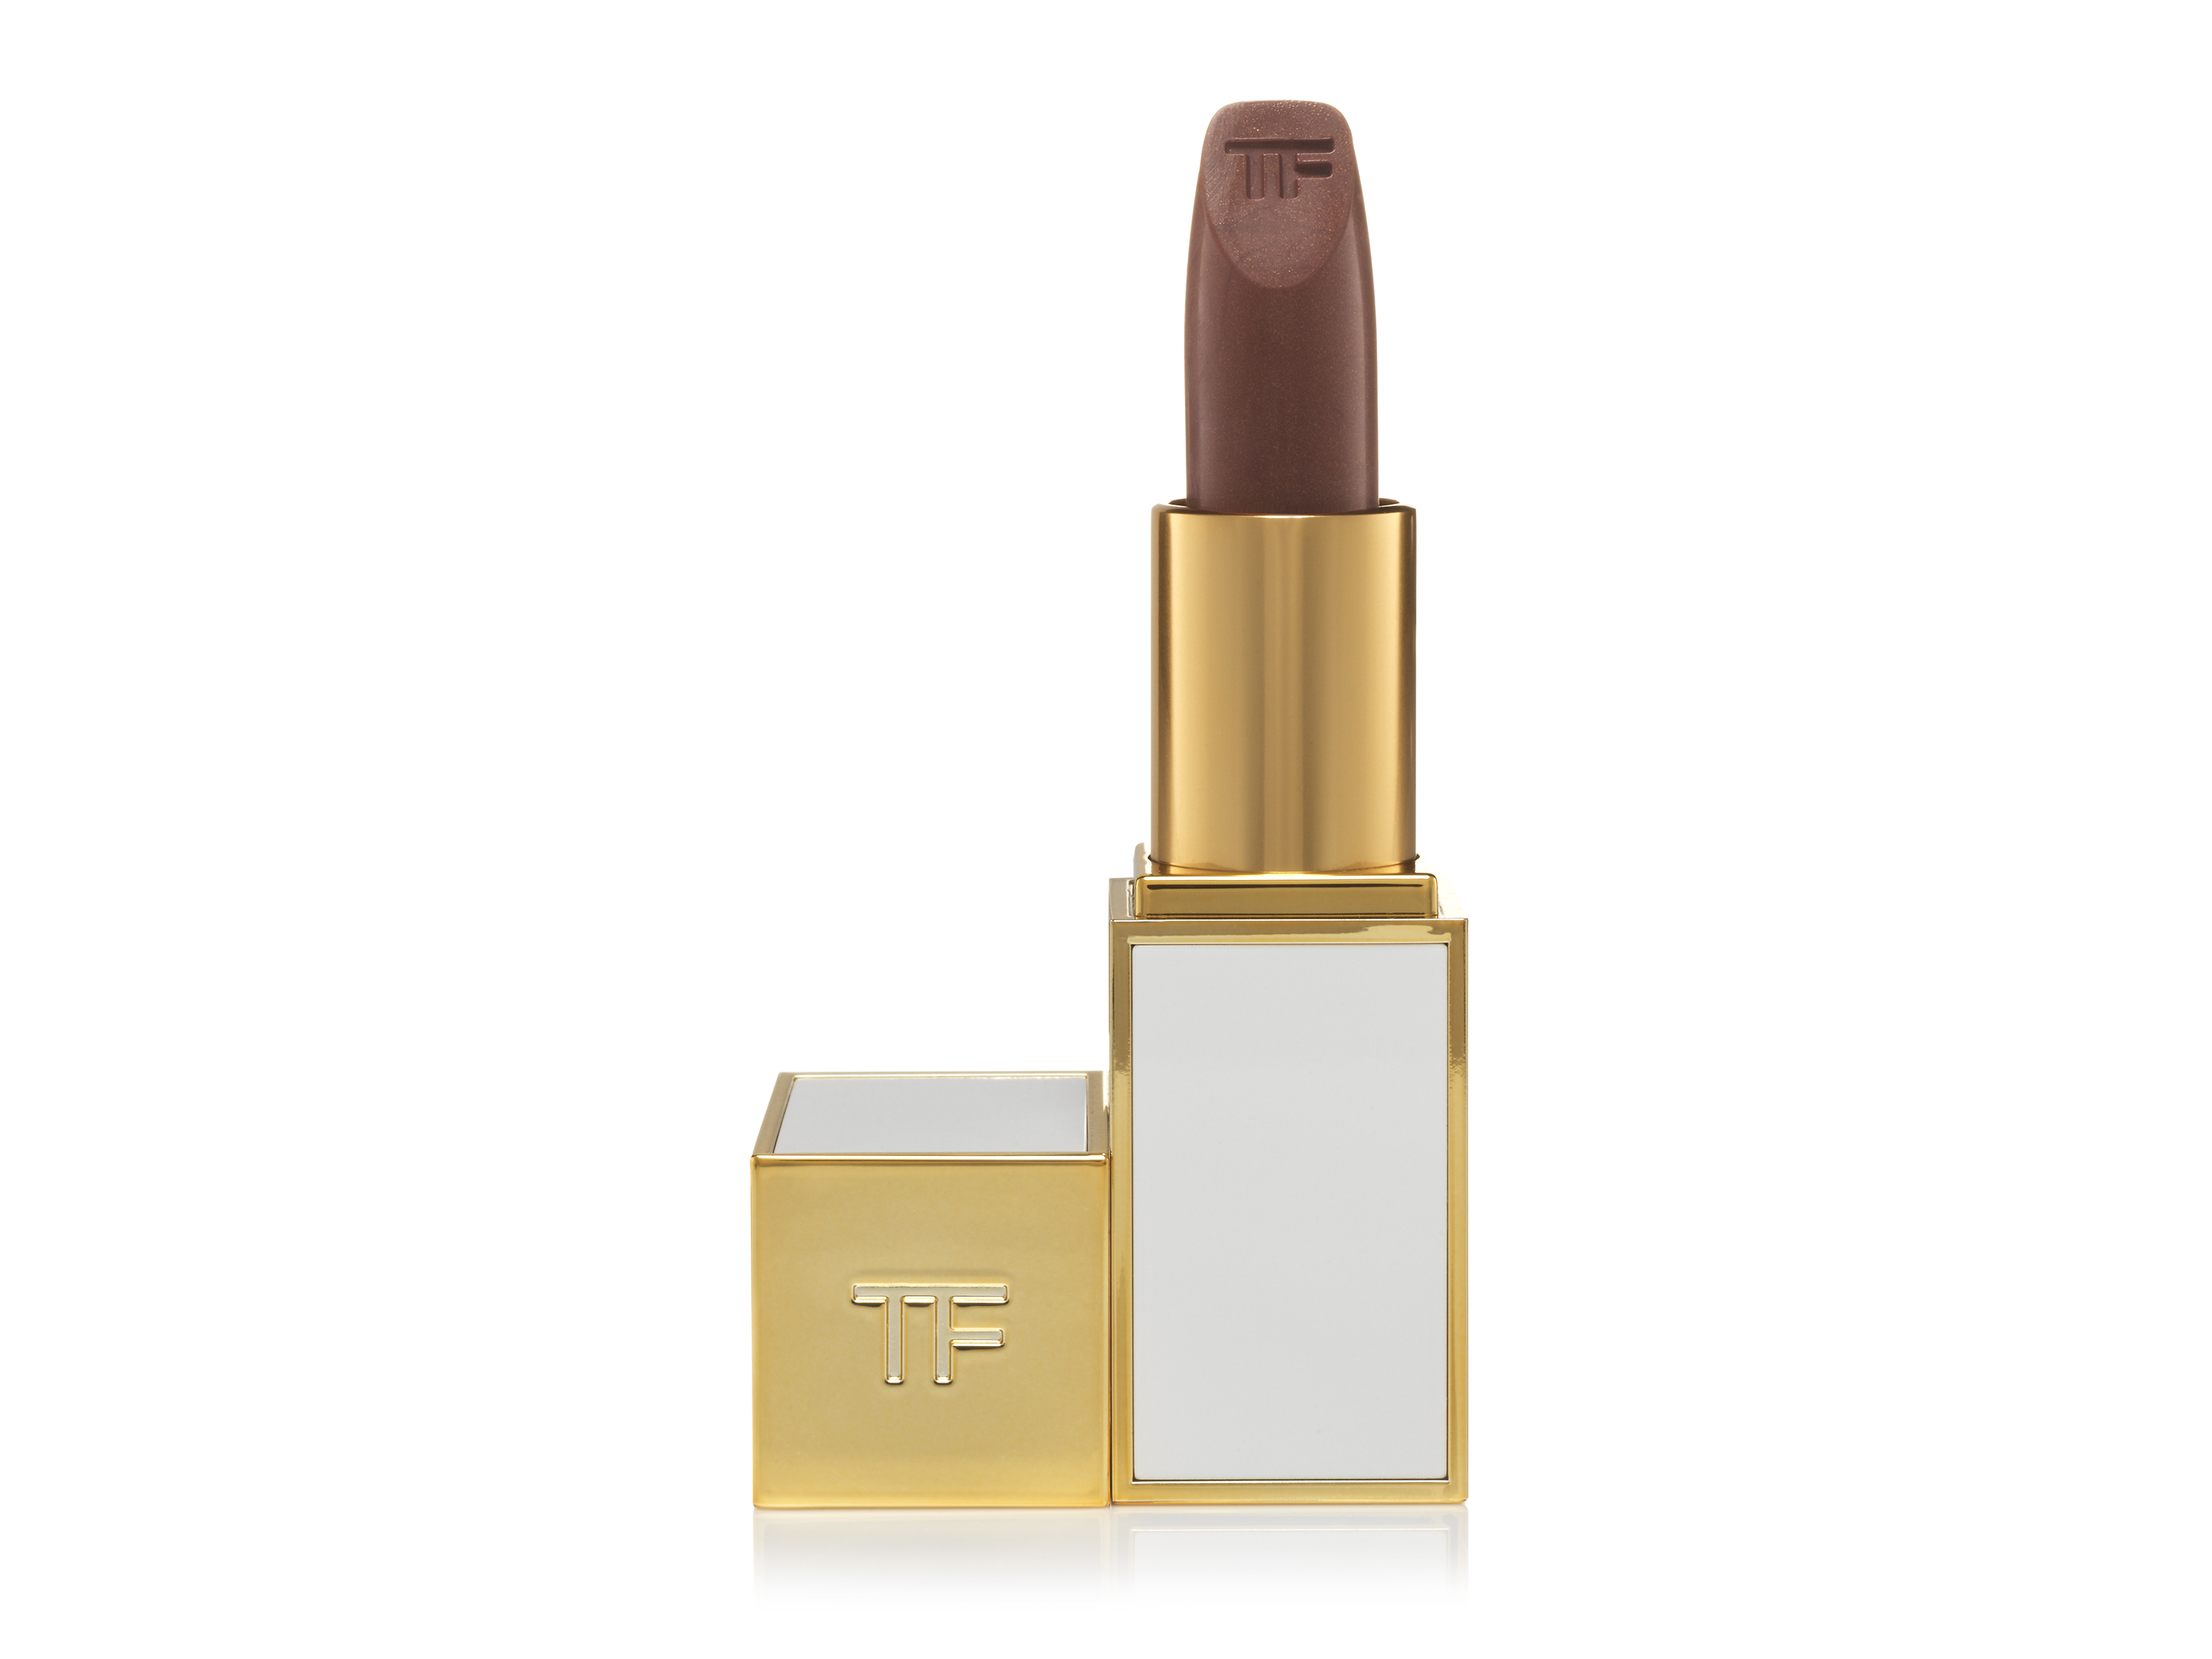 The perfect nude lipstick